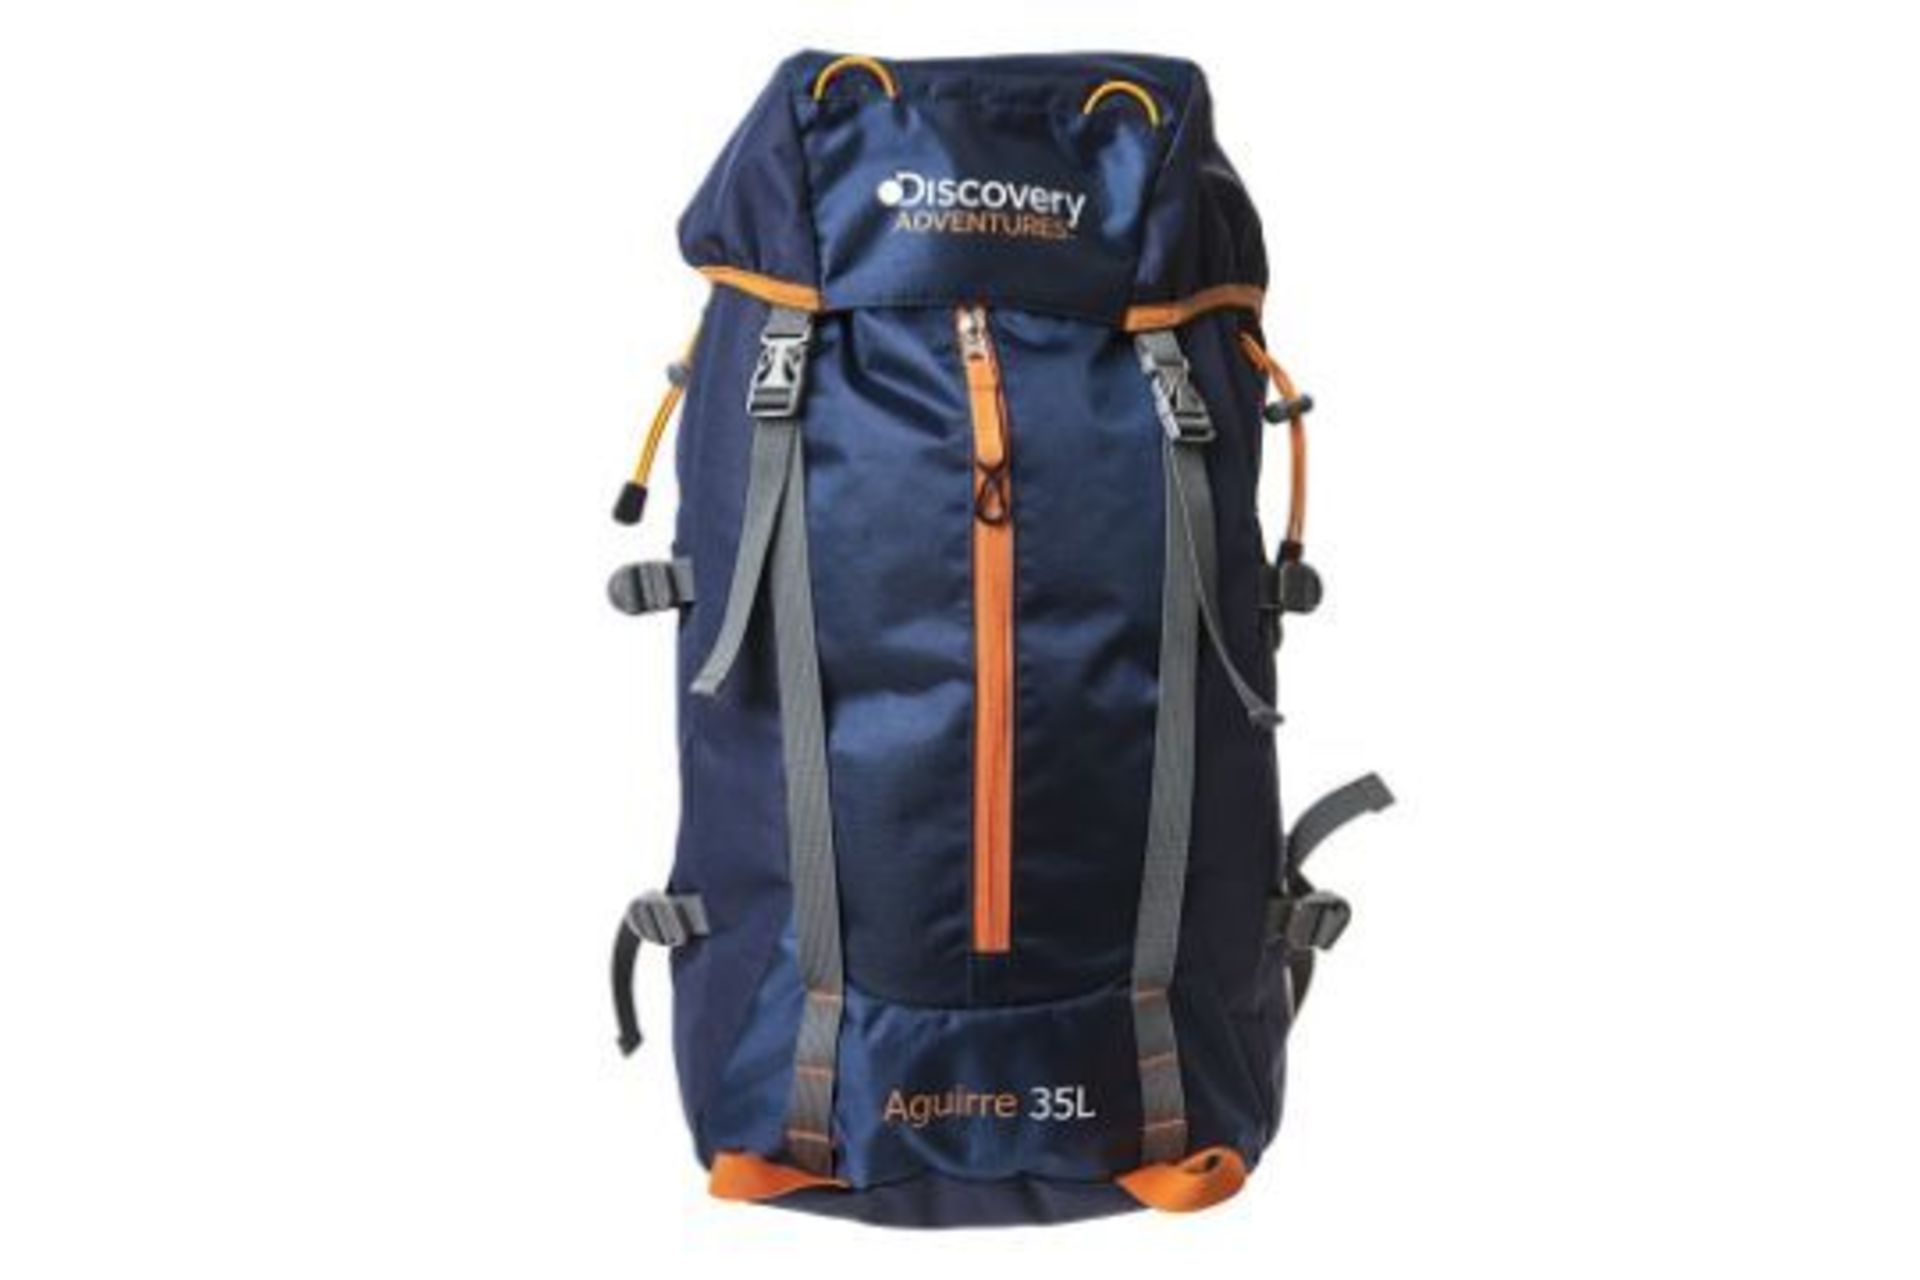 New Summit Adventure Backpack DA 35L Daypack